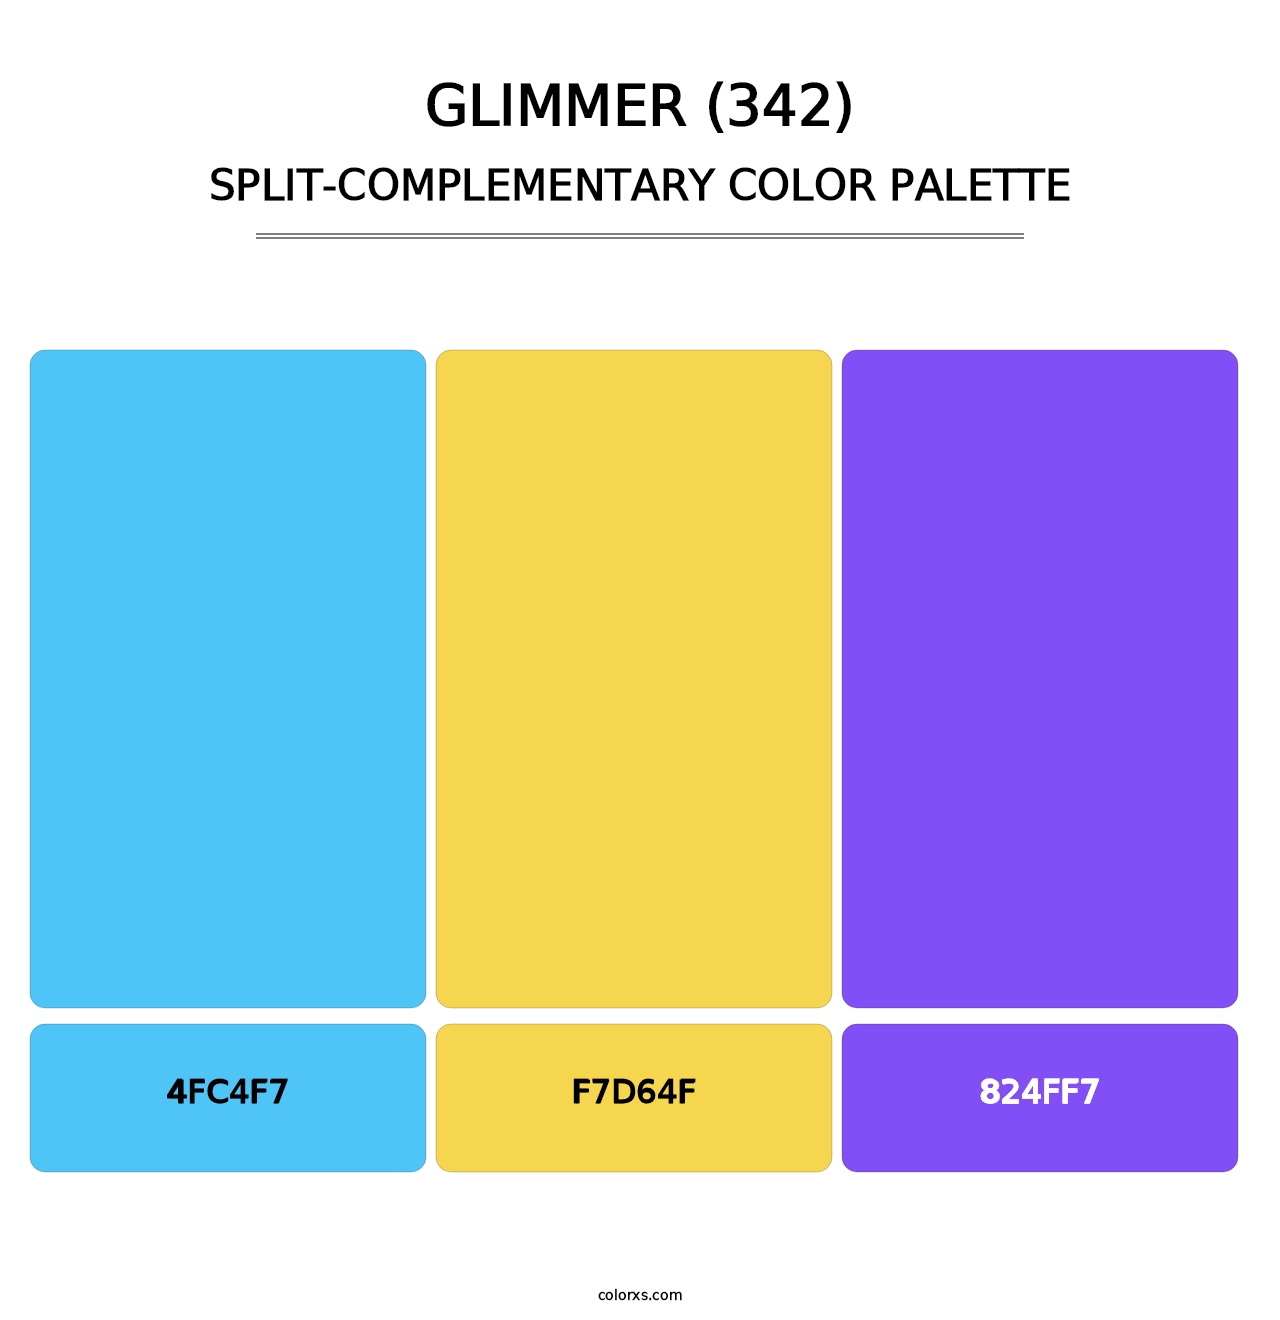 Glimmer (342) - Split-Complementary Color Palette